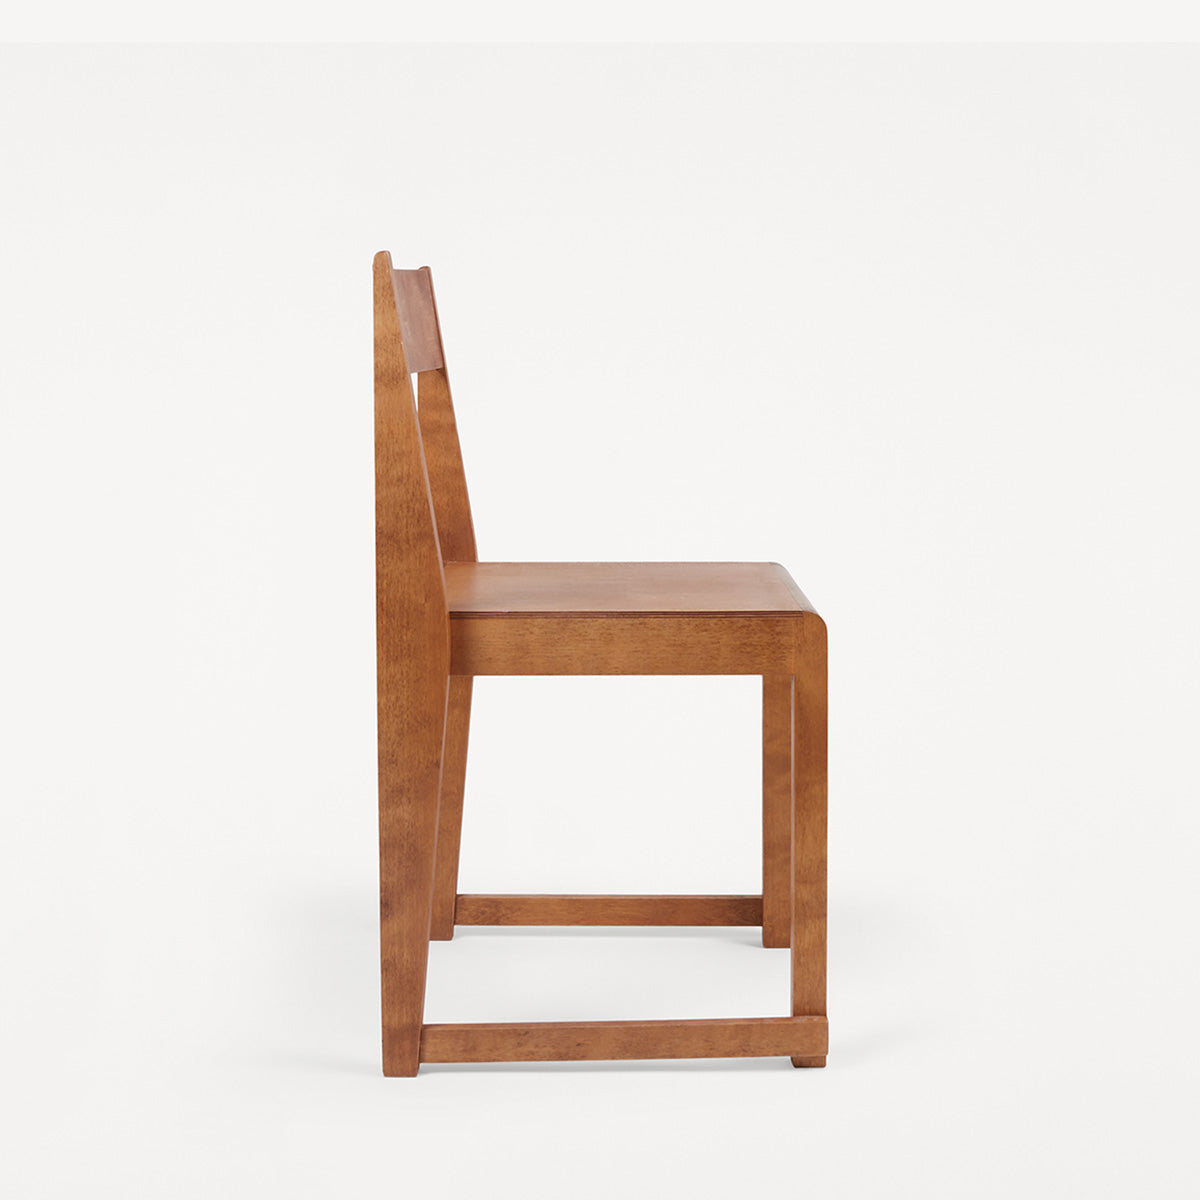 Side shot of Frama chair 01